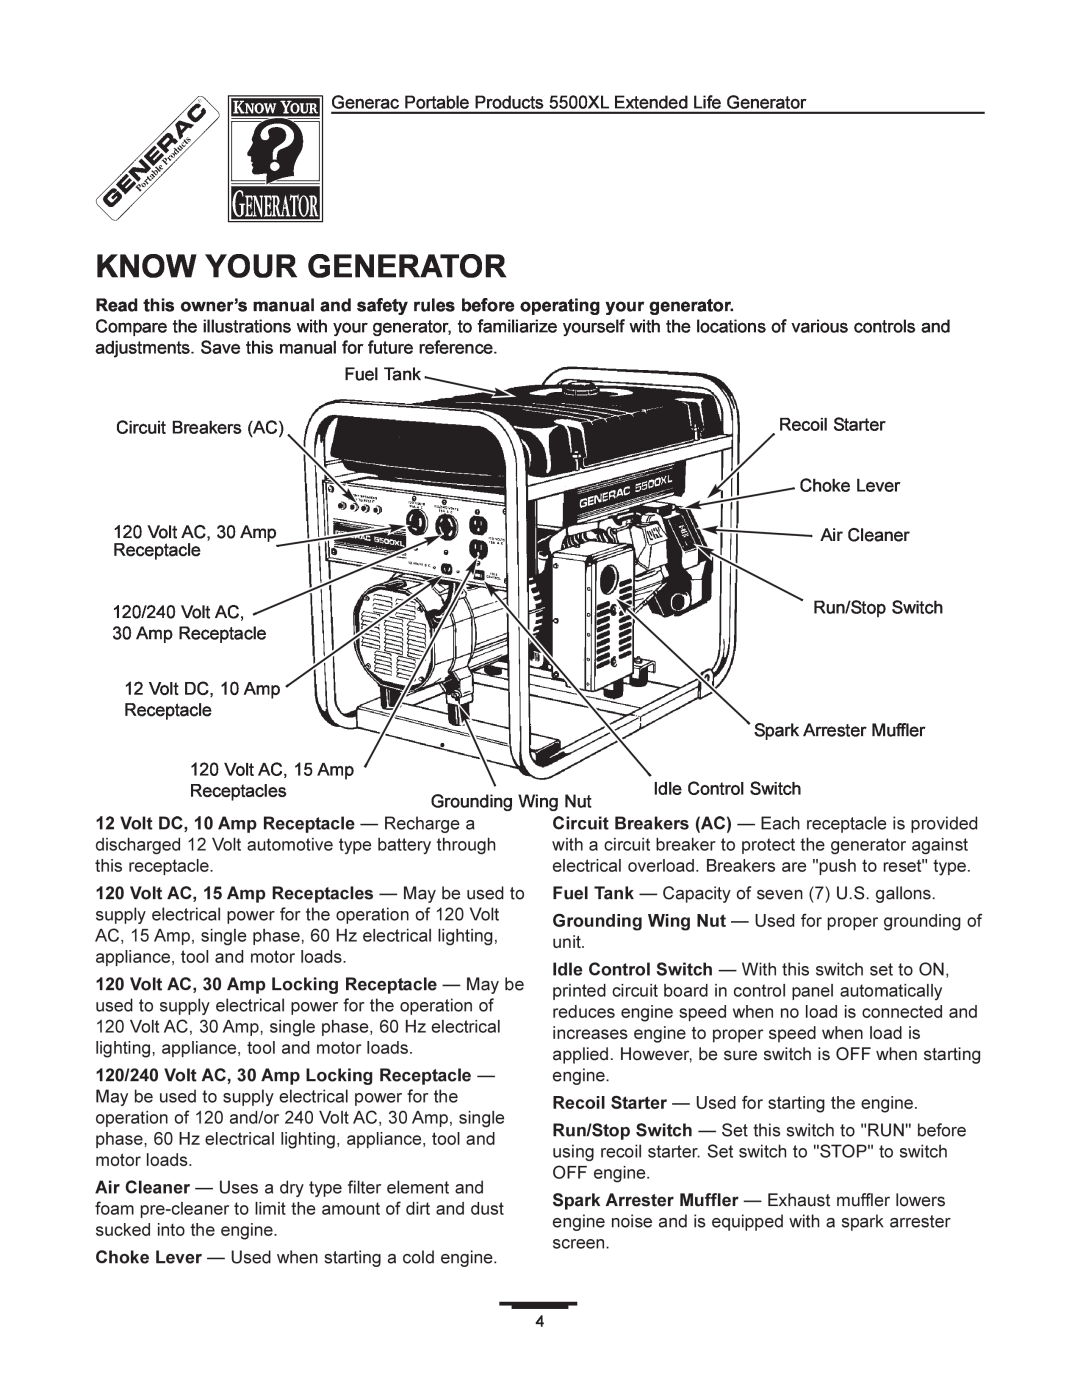 Generac 5500XL manual Know Your Generator 